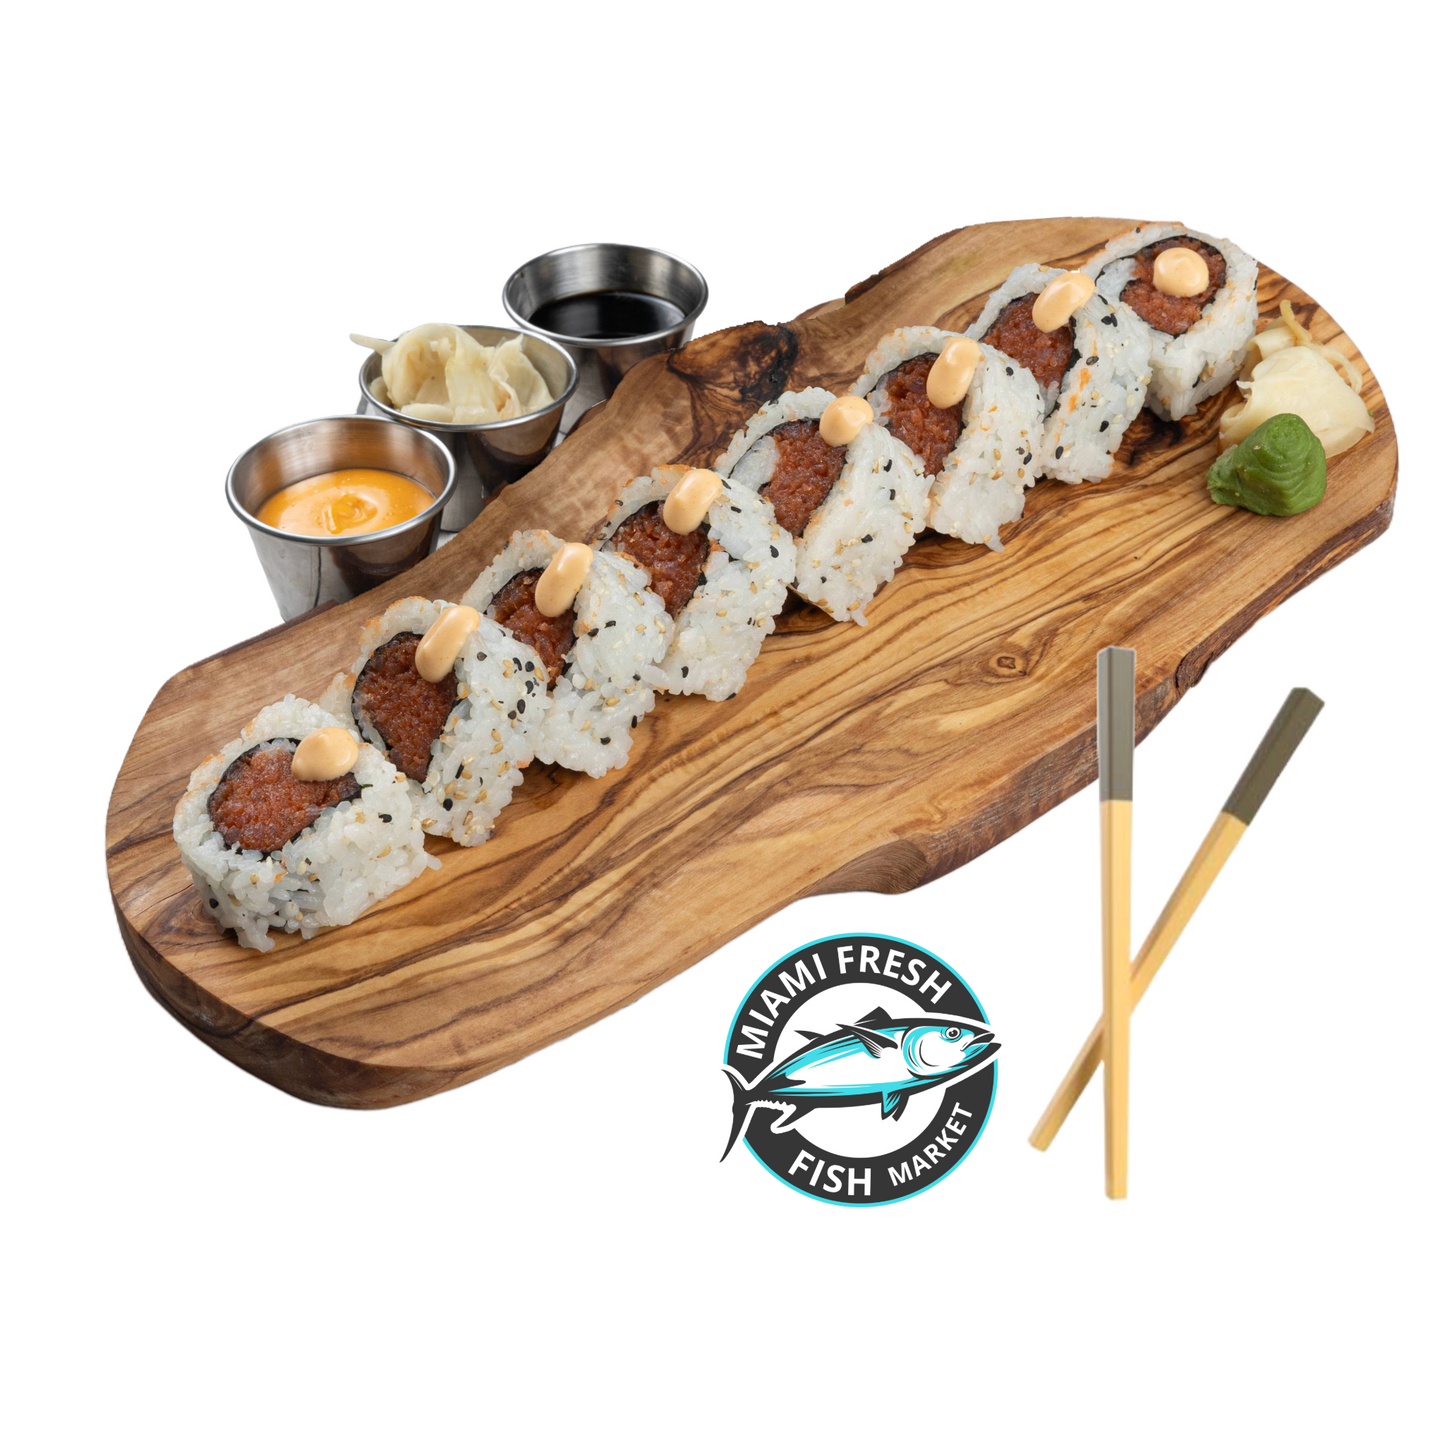 #16 Crunch Sushi Roll Serving size 8 Pcs